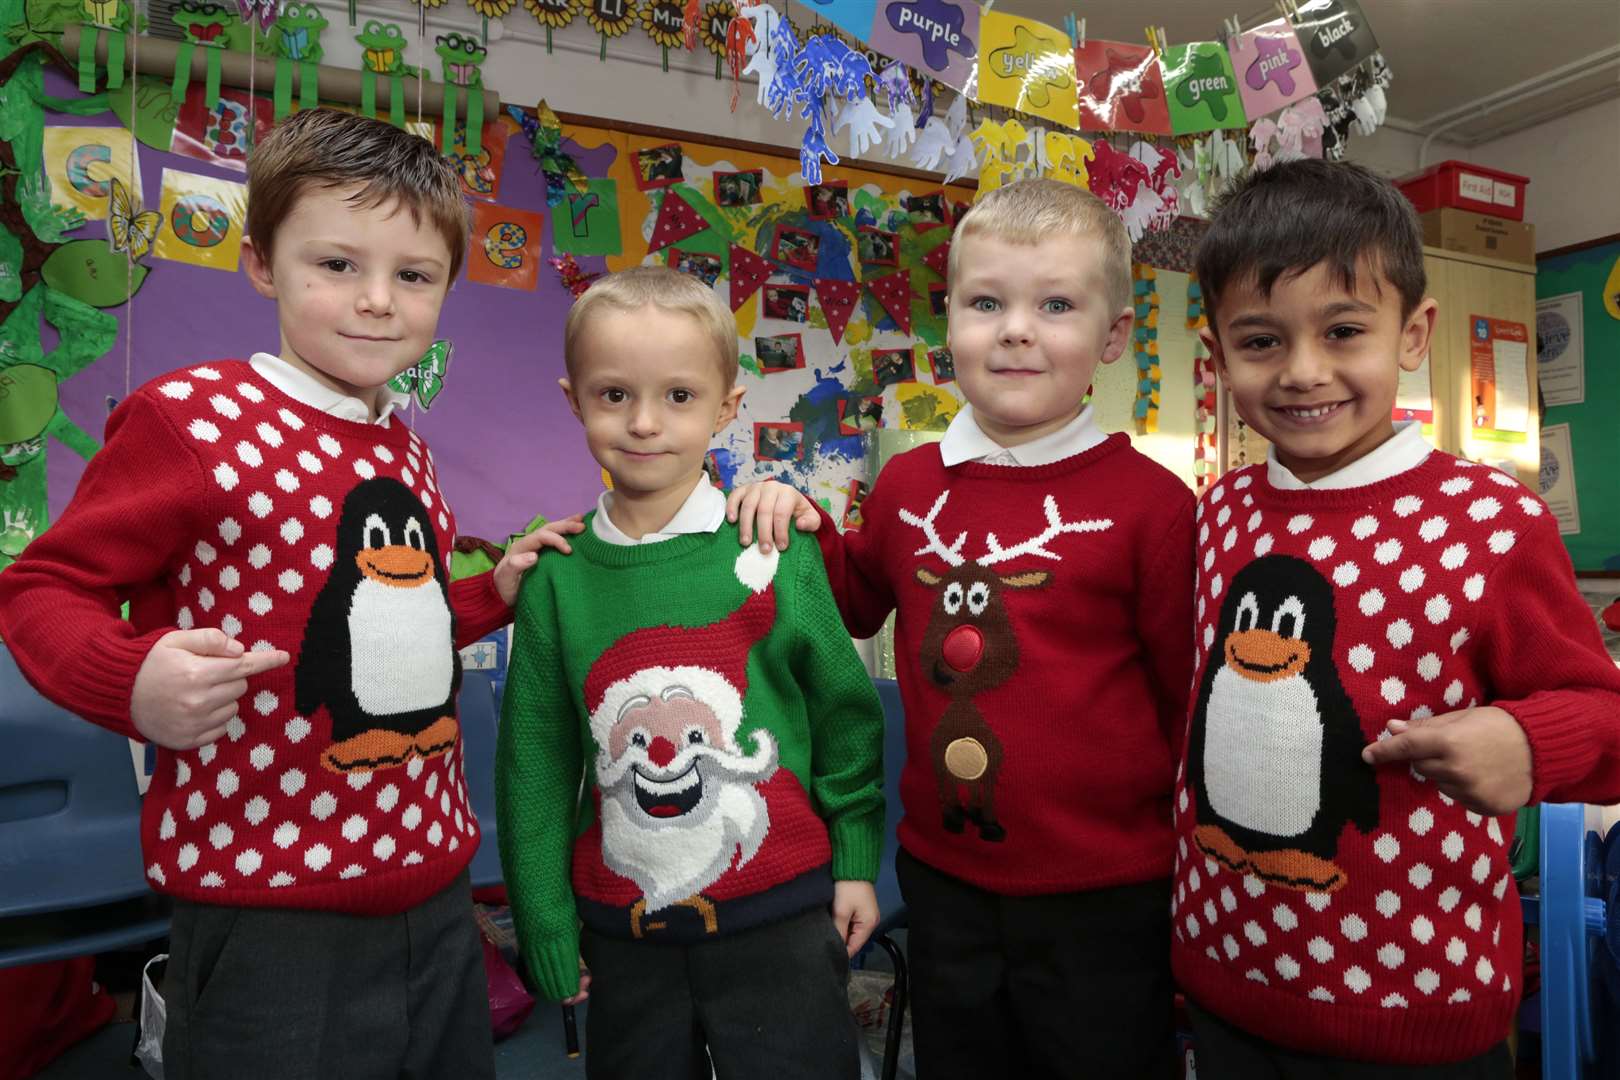 Westlands Primary School pupils Harry, Owen, Fraizer and Brayden pose in their Christmas jumpers